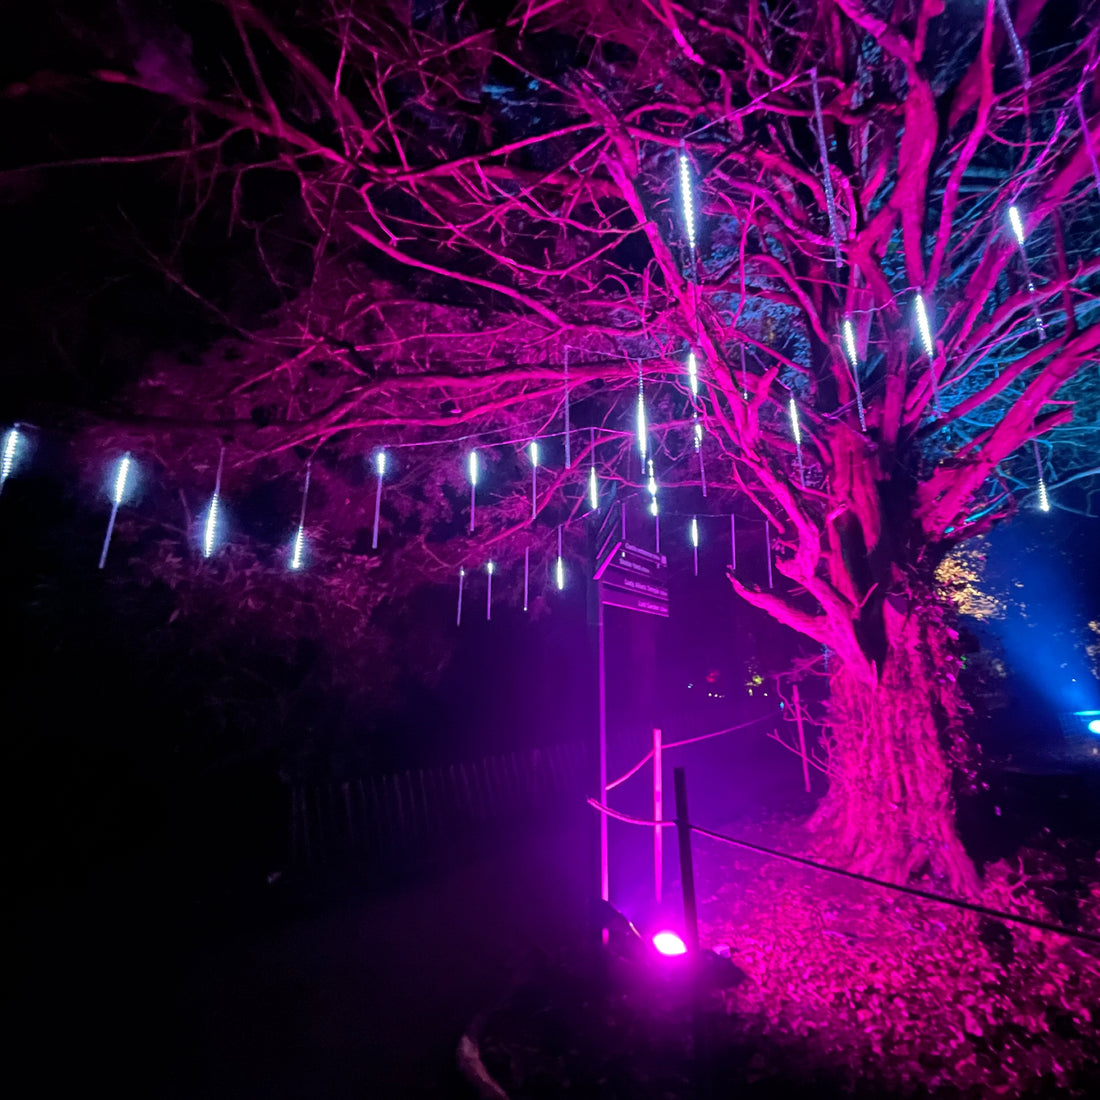 Hillsborough Castle and Gardens light up for Christmas